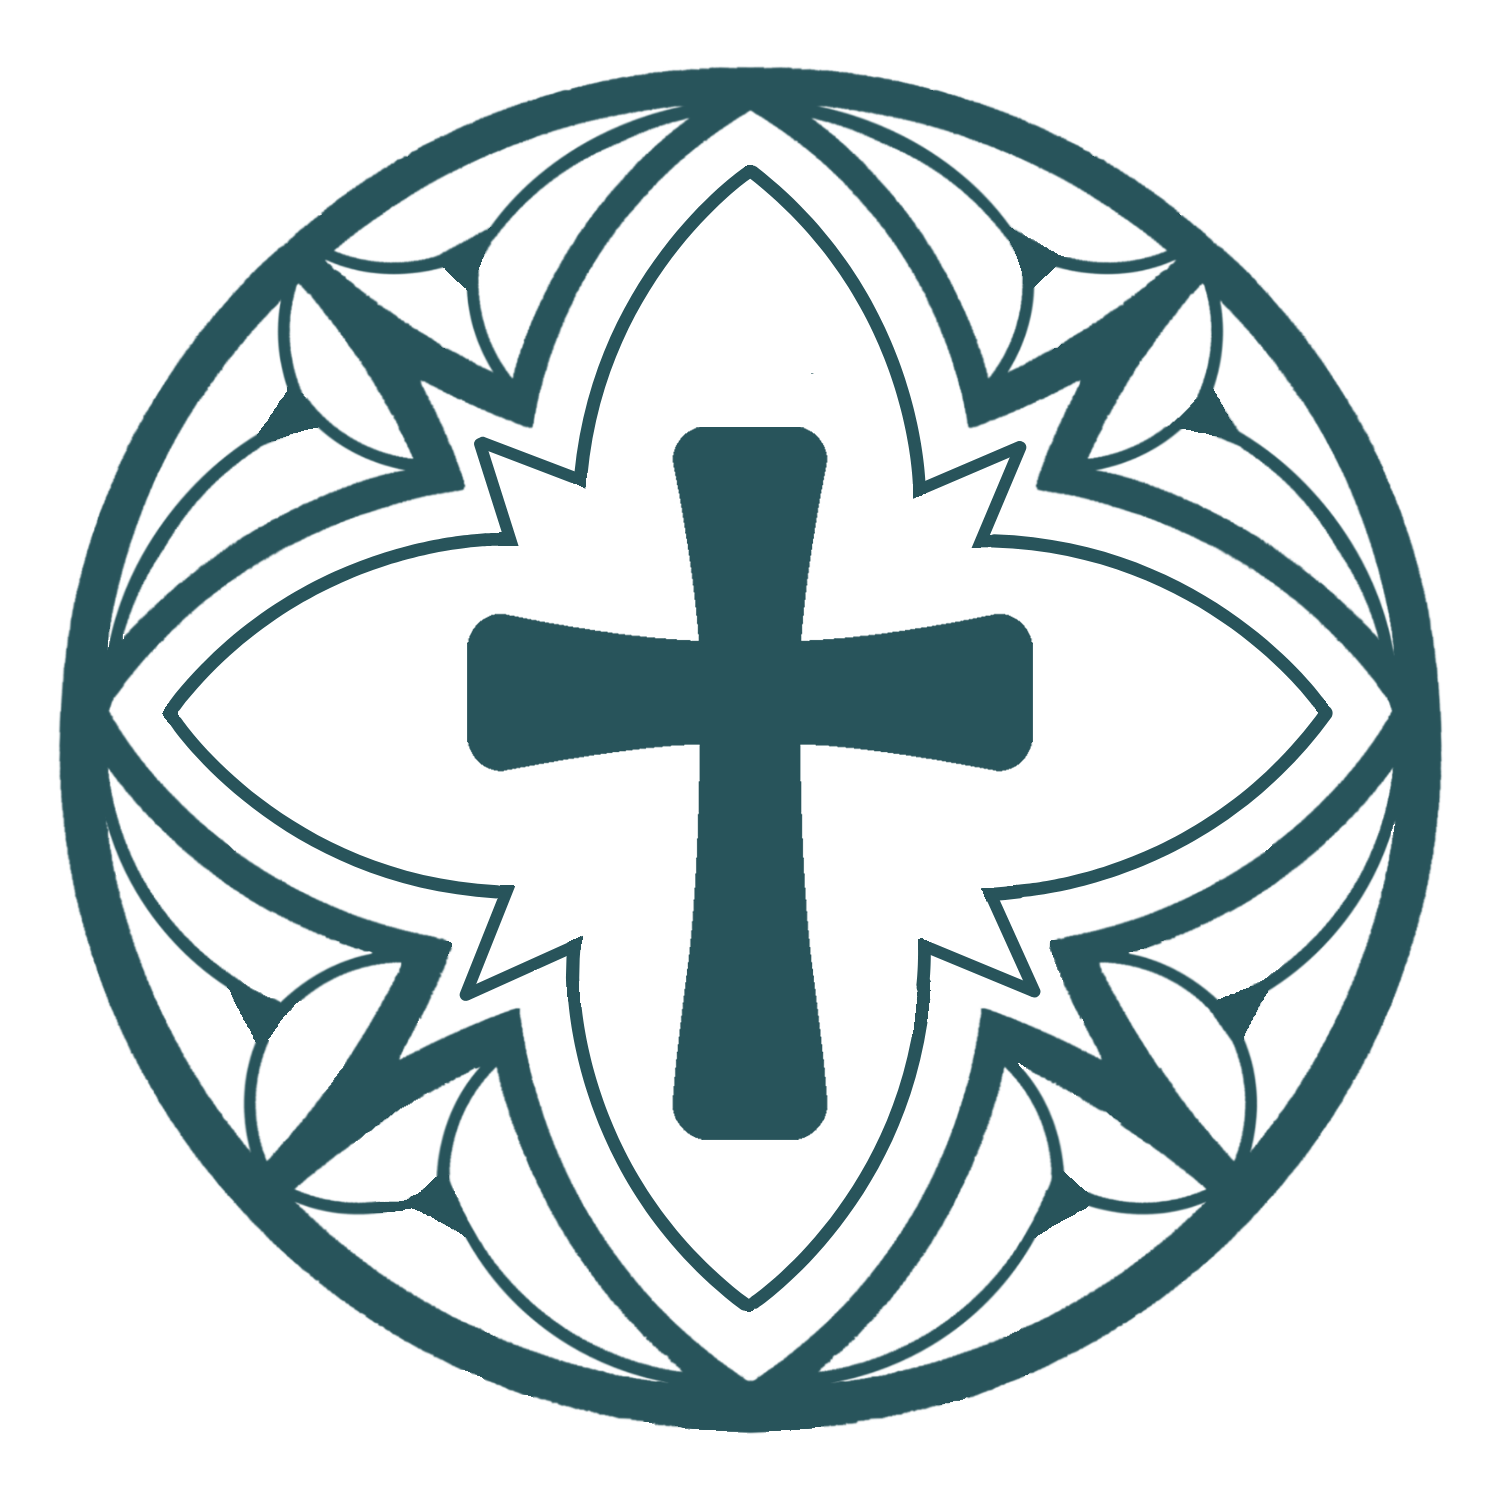 Buccleuch Free Church - Logo